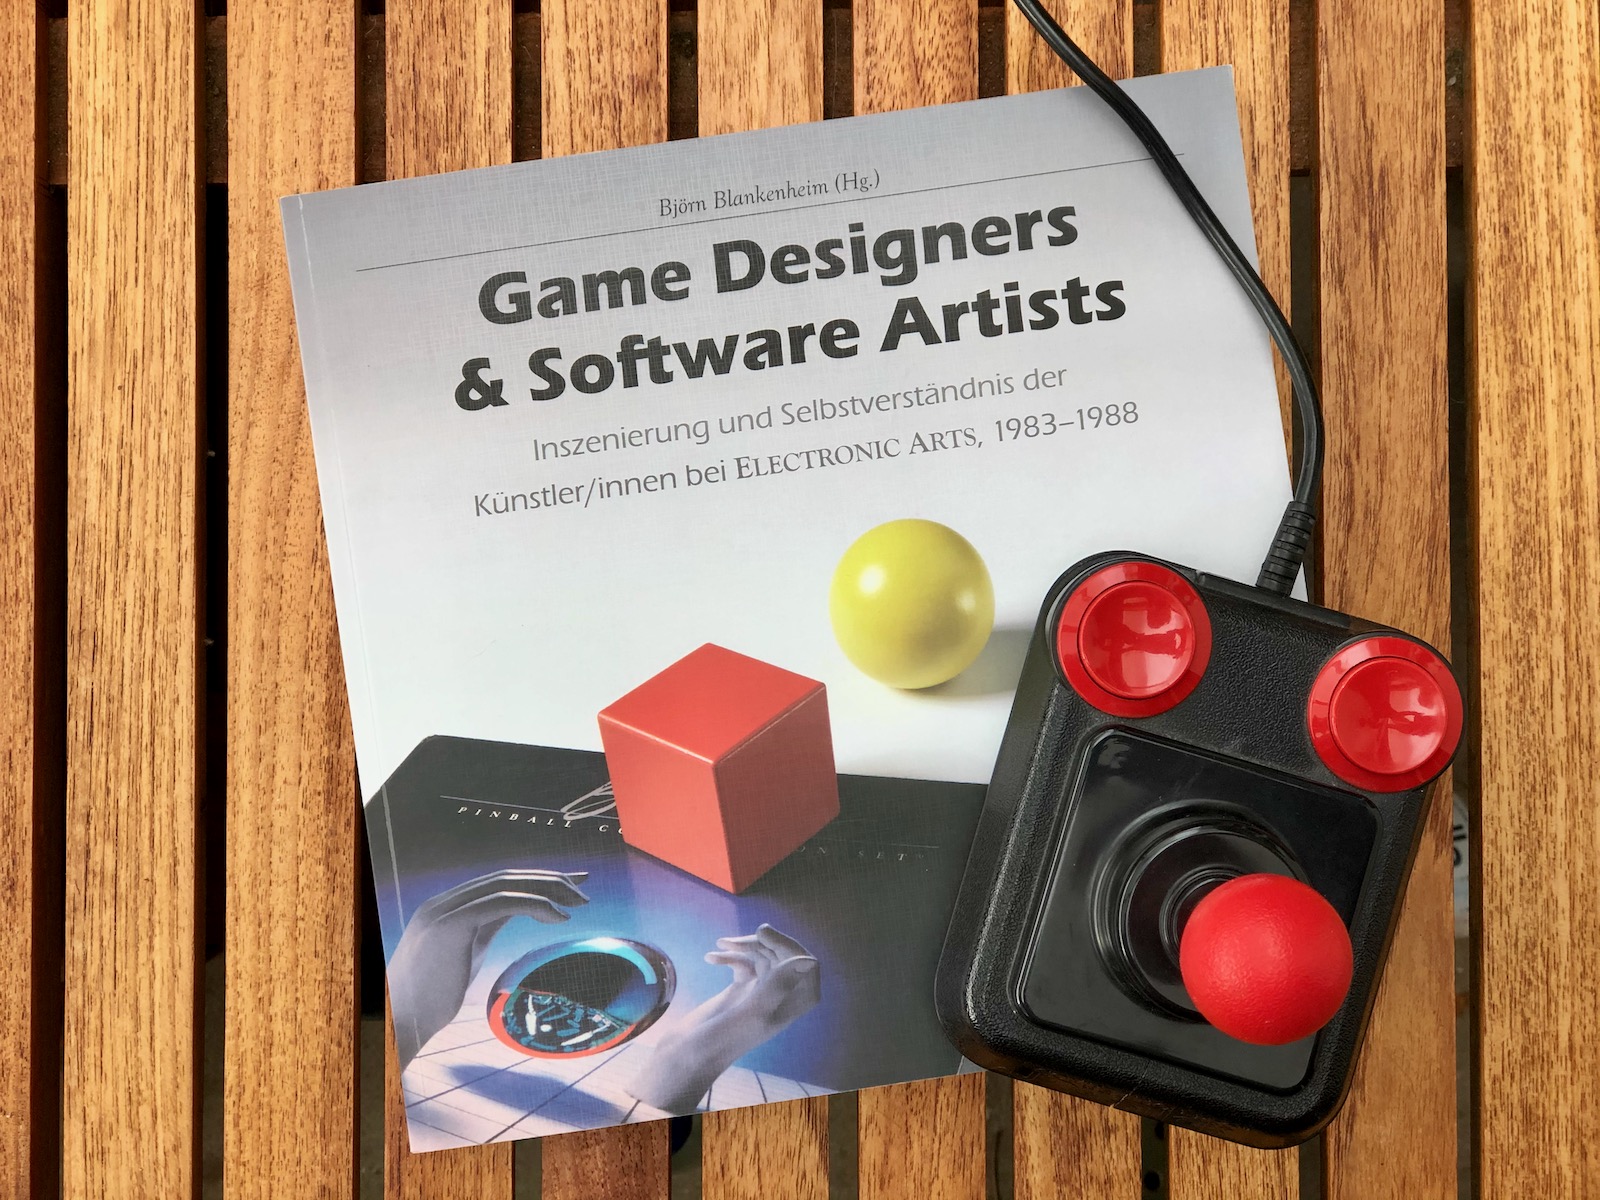 Der Katalog zur Ausstellung Game Designers & Software Artists. (Bild: André Eymann)